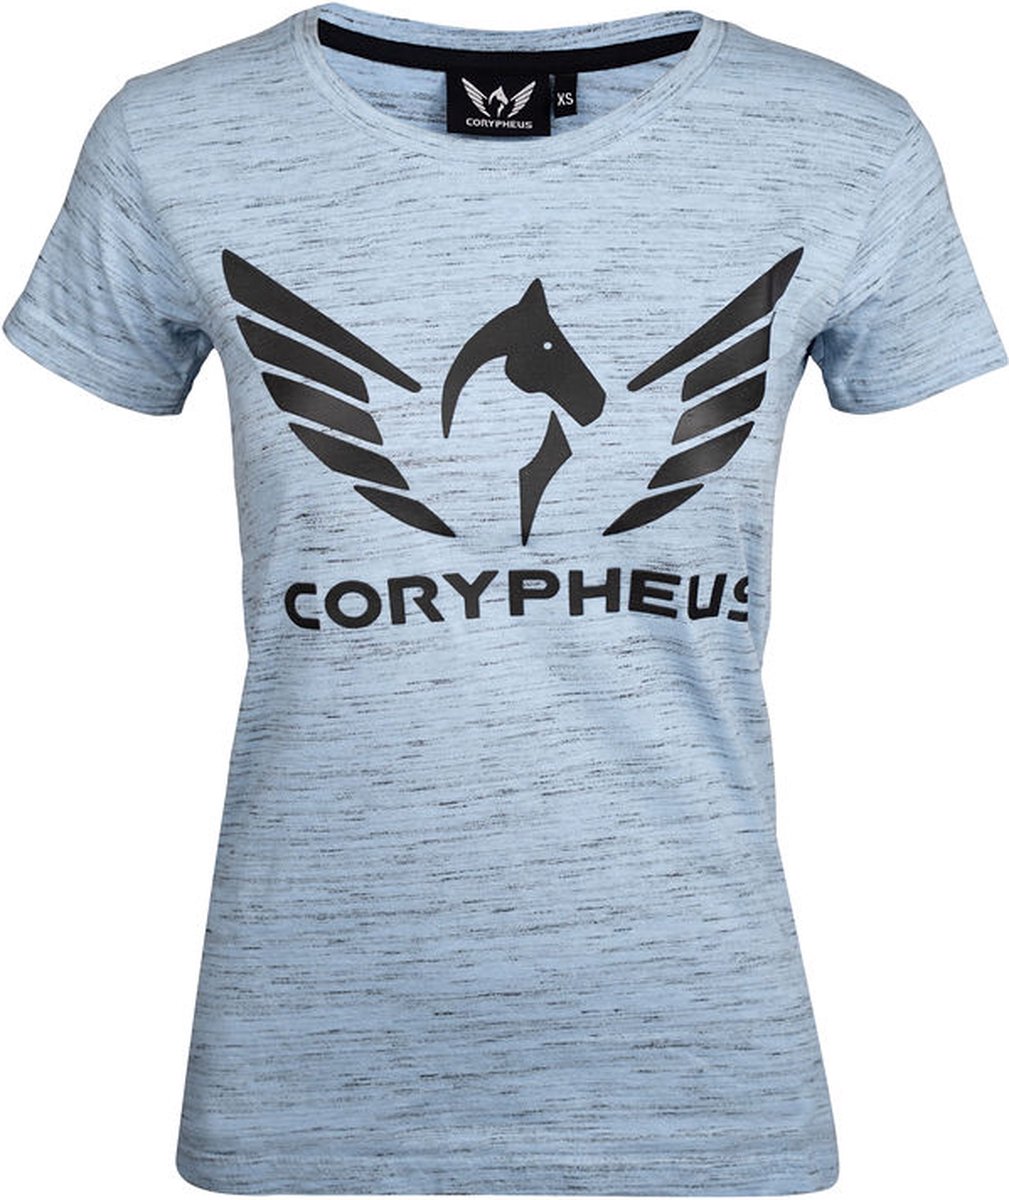 Corypheus Skyway Women's T-Shirt - XSmall